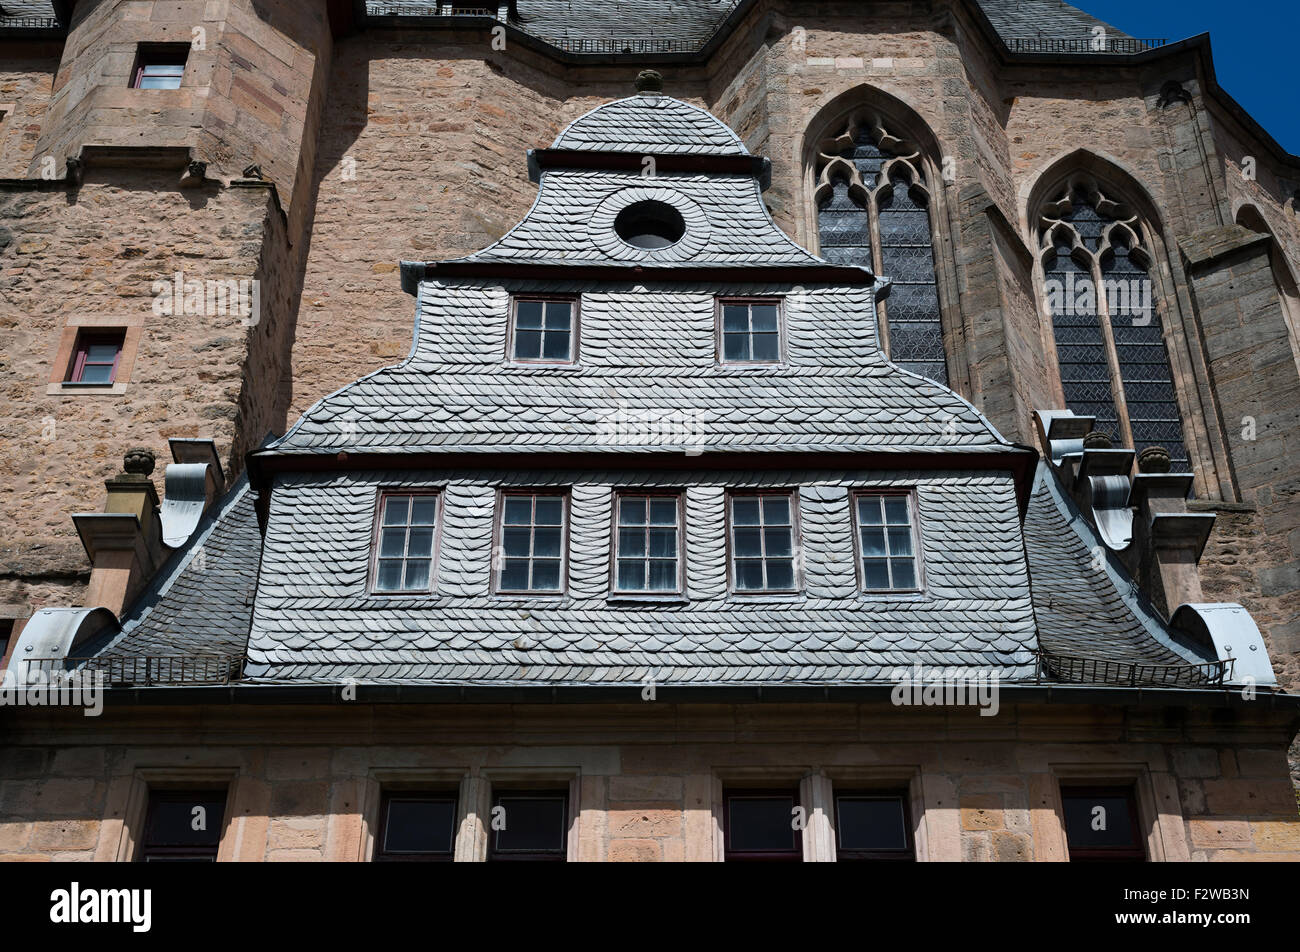 30.05.2015, Marburg, Hesse, Germany - The Castle of Marburg. Detail image of a shingle-covered stem. 0JL150530D021CAROEX.JPG - Stock Photo